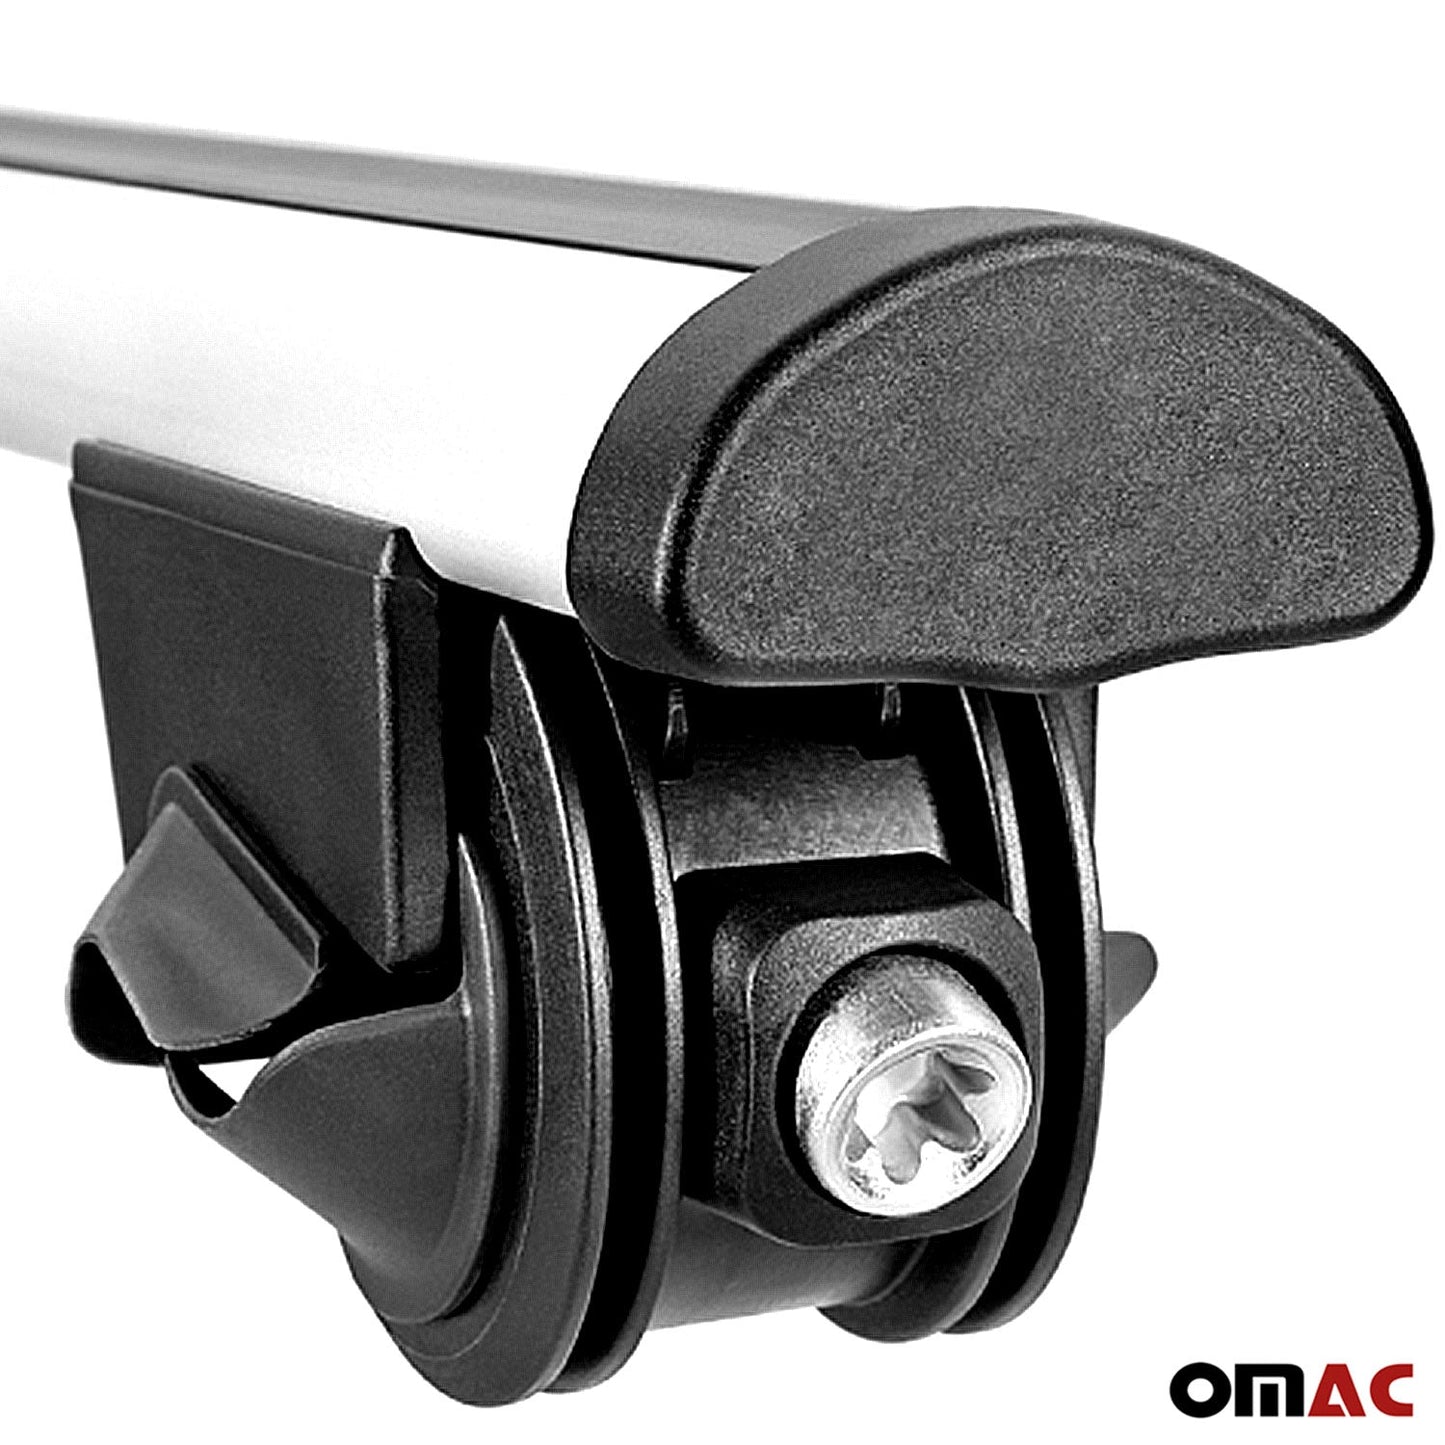 OMAC Roof Rack Cross Bars Lockable for Fiat Idea 2003-2012 Aluminium Silver 2Pcs U003883